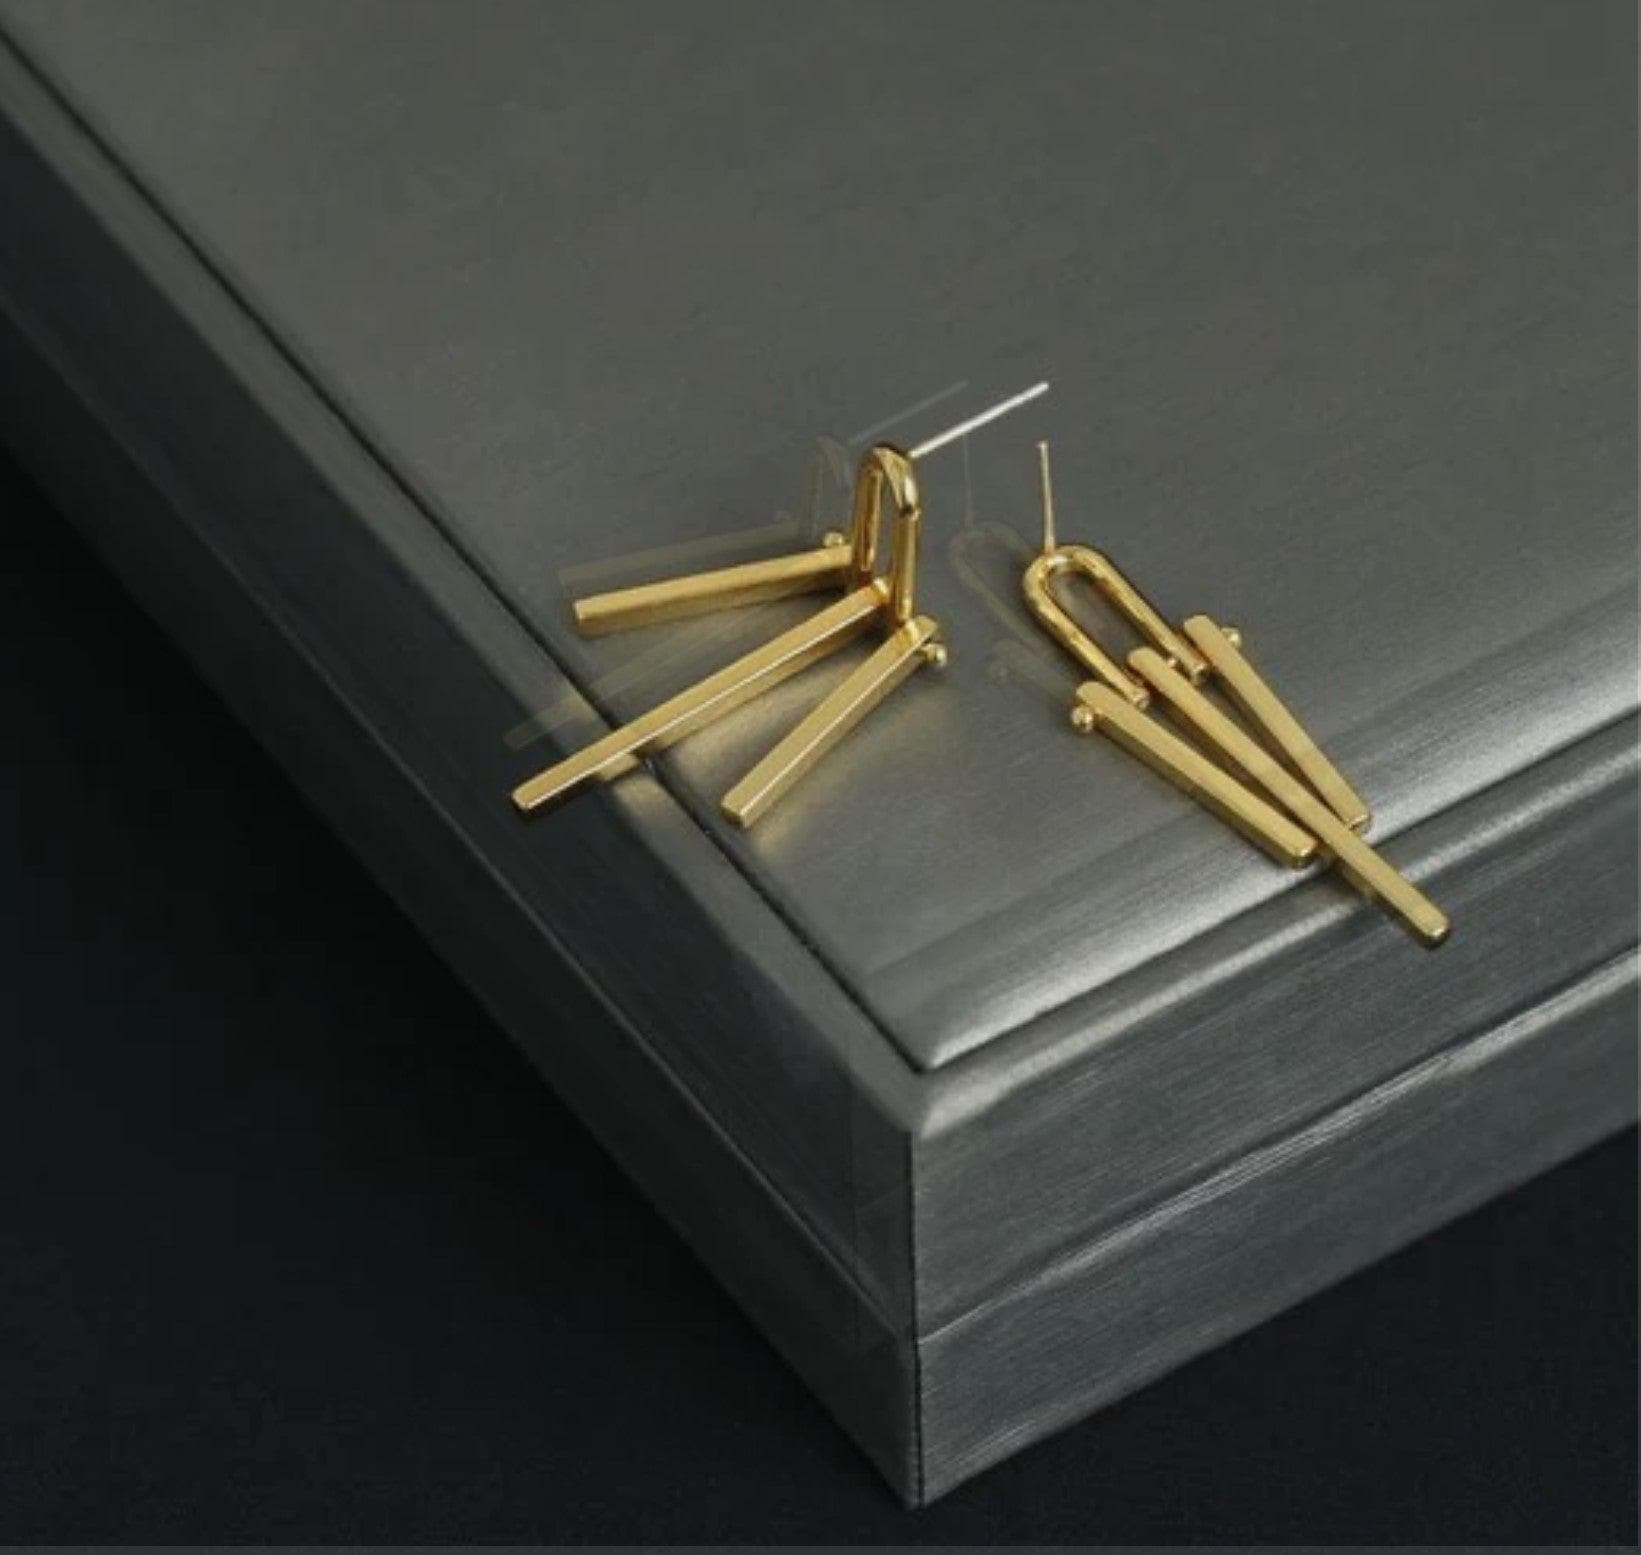 SOCALI 18K Gold Line Tassel Earring - SwagglyLife Home & Fashion